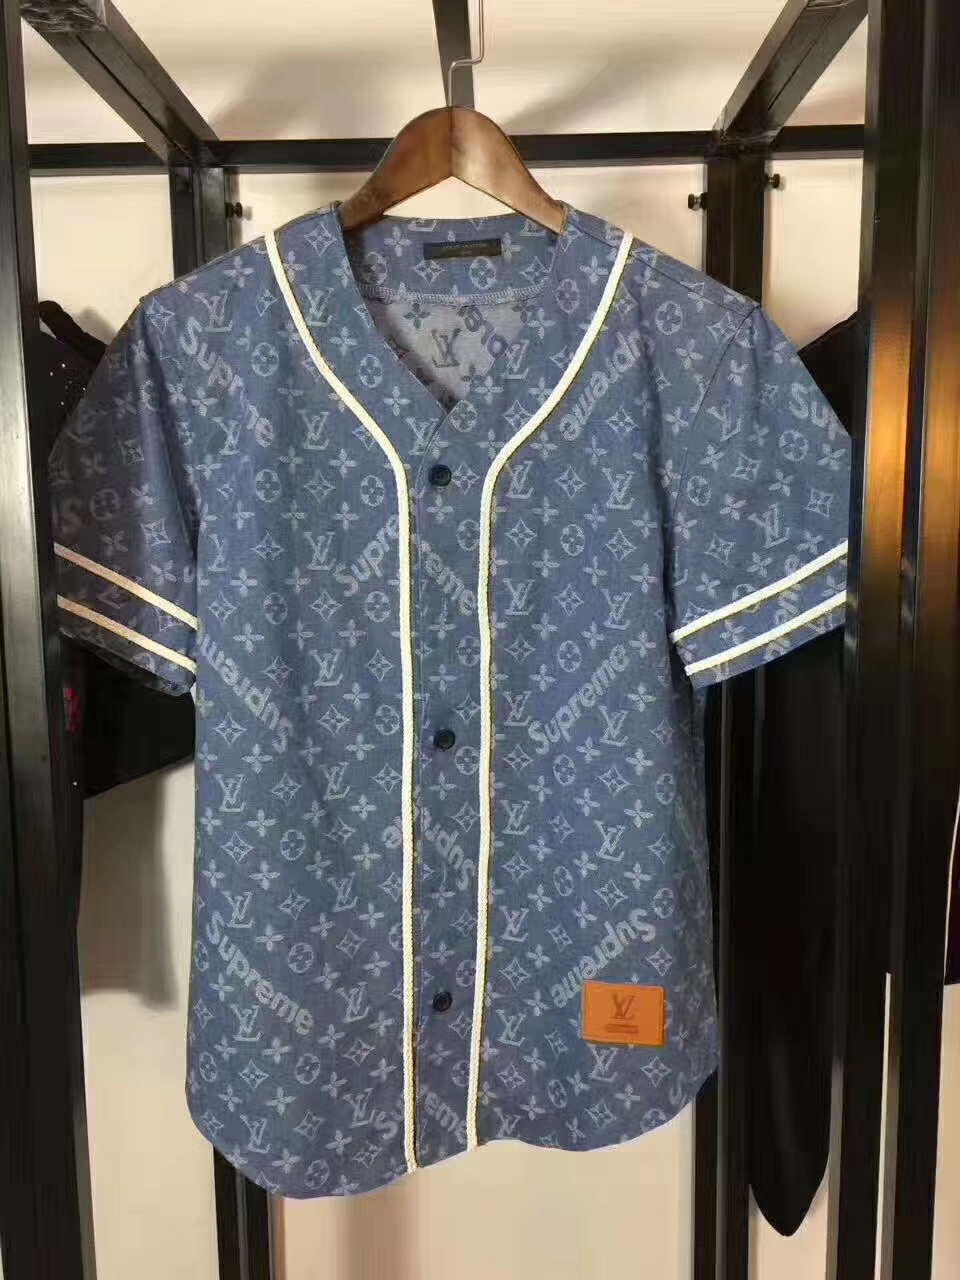 Louis vuitton baseball jersey shirt lv luxury clothing clothes